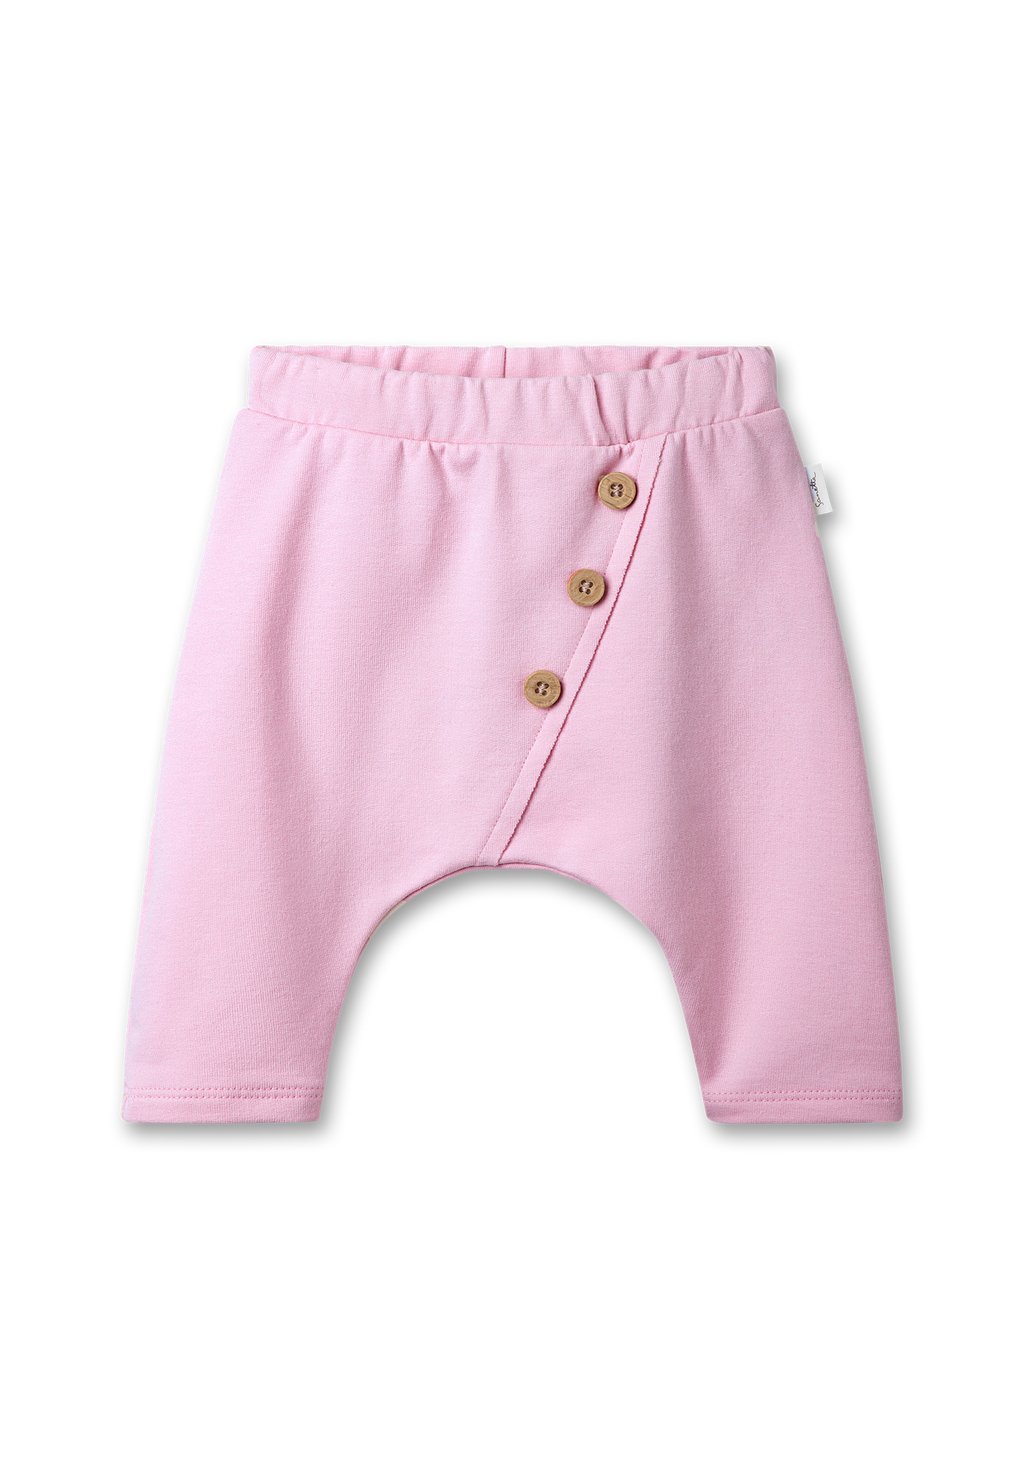 Брюки из ткани Sanetta Pure, цвет rosa брюки из ткани unisex sanetta pure цвет blau